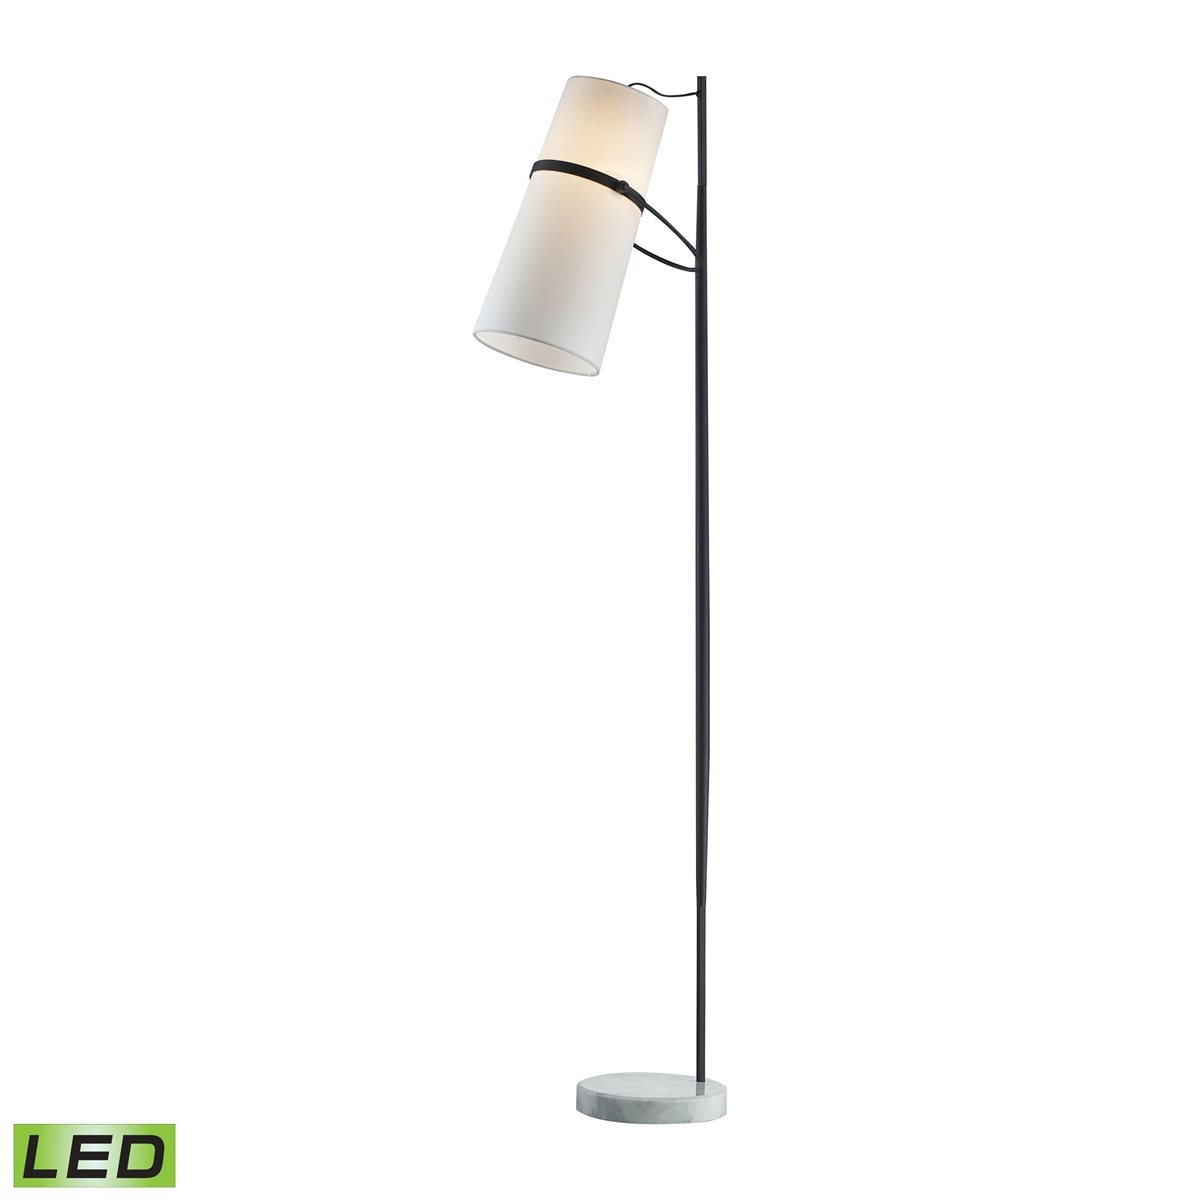 BANDED SHADE LED FLOOR LAMP - Image 0